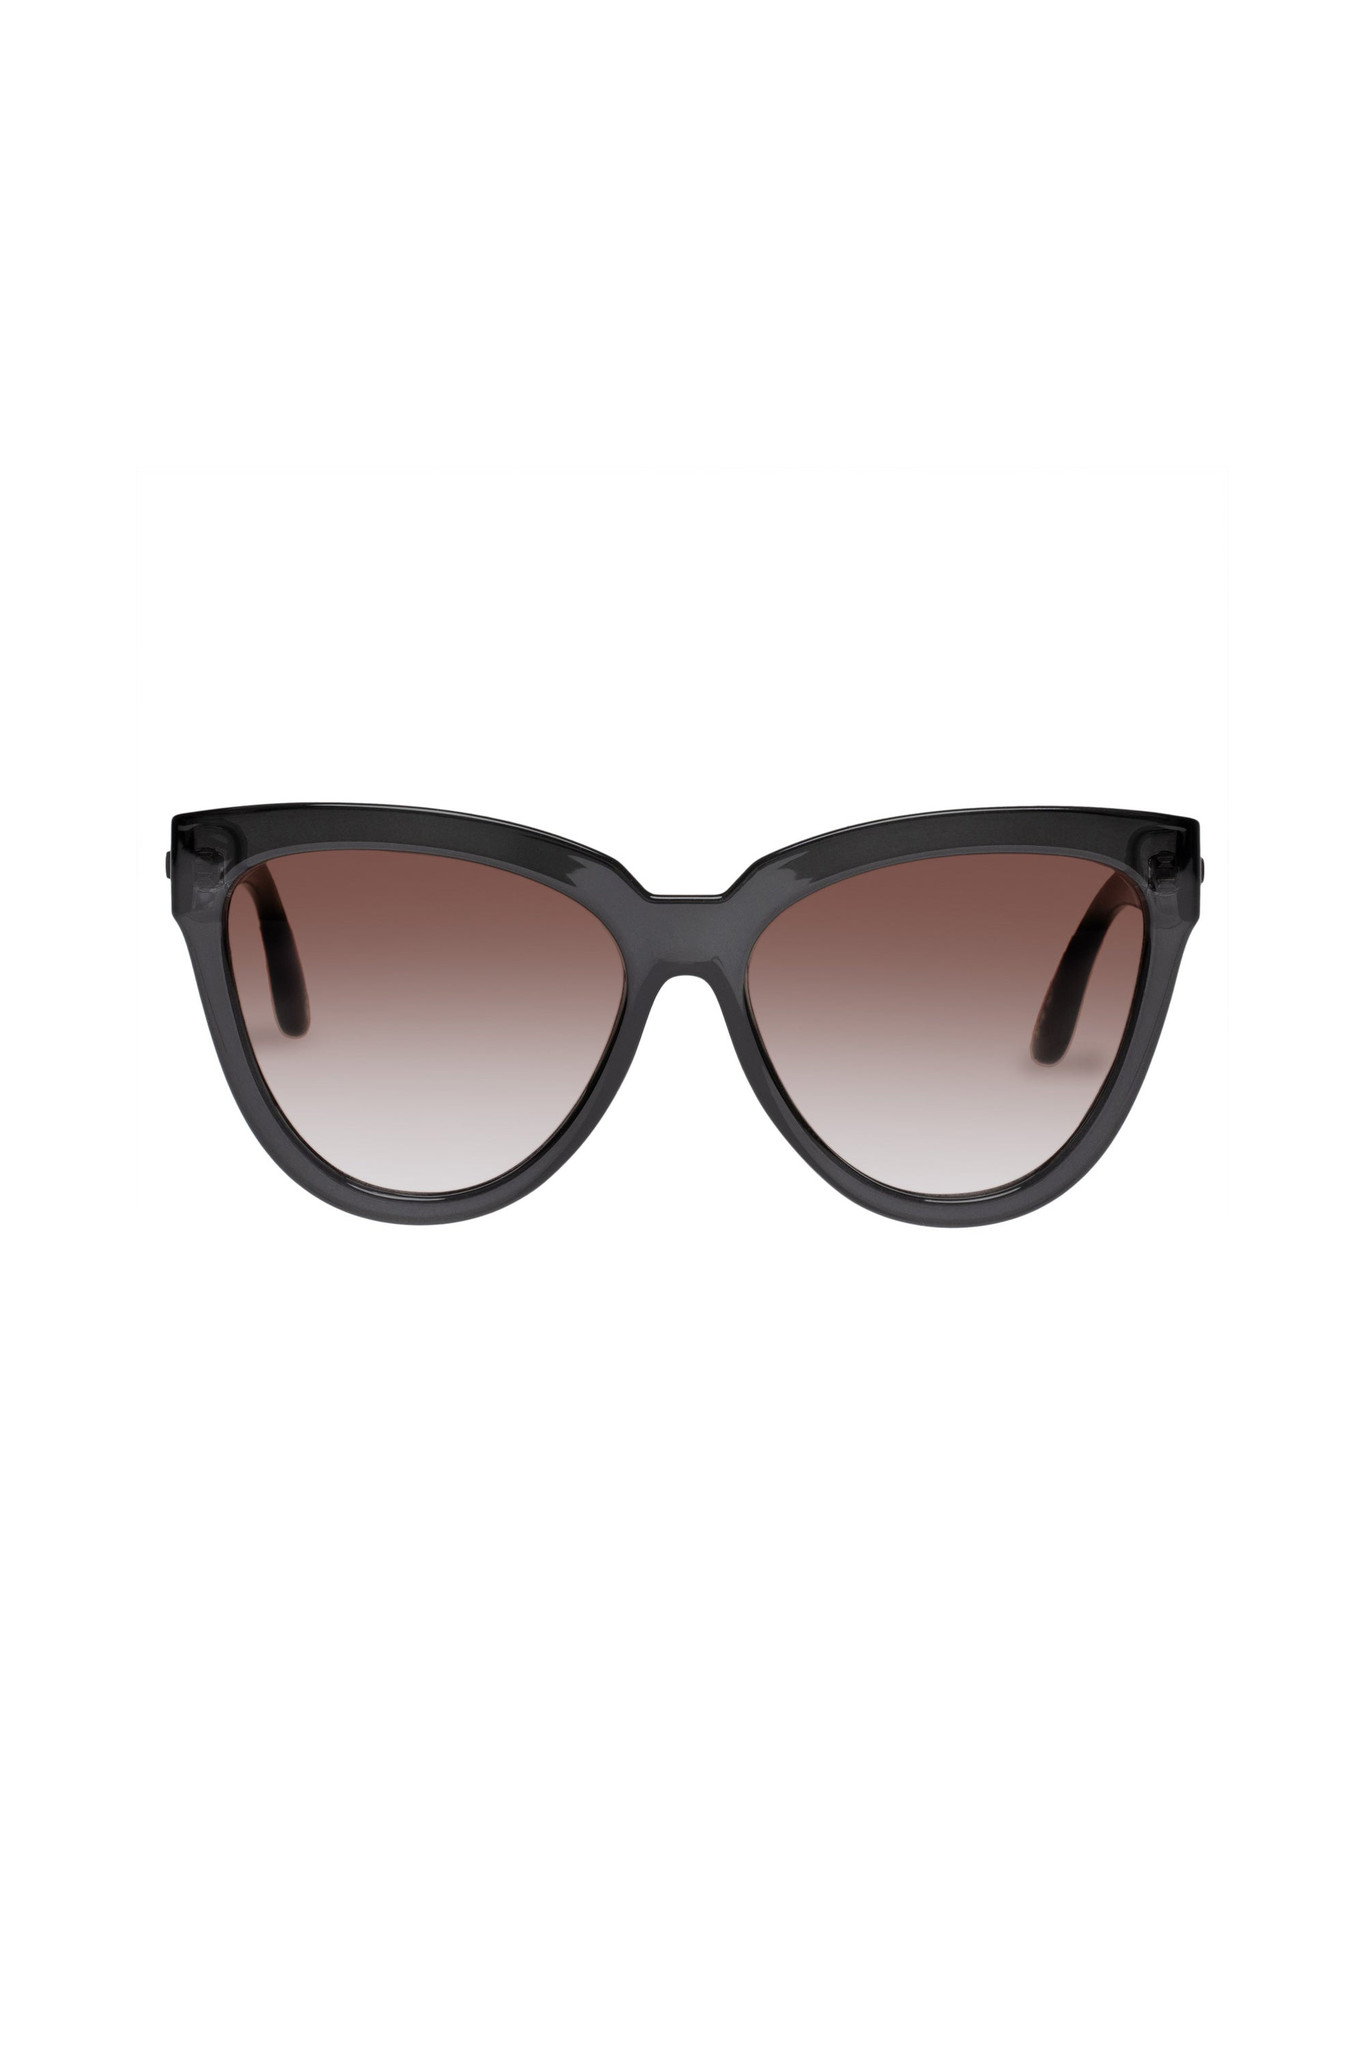 Liar Lair Sunglasses - Charcoal-1